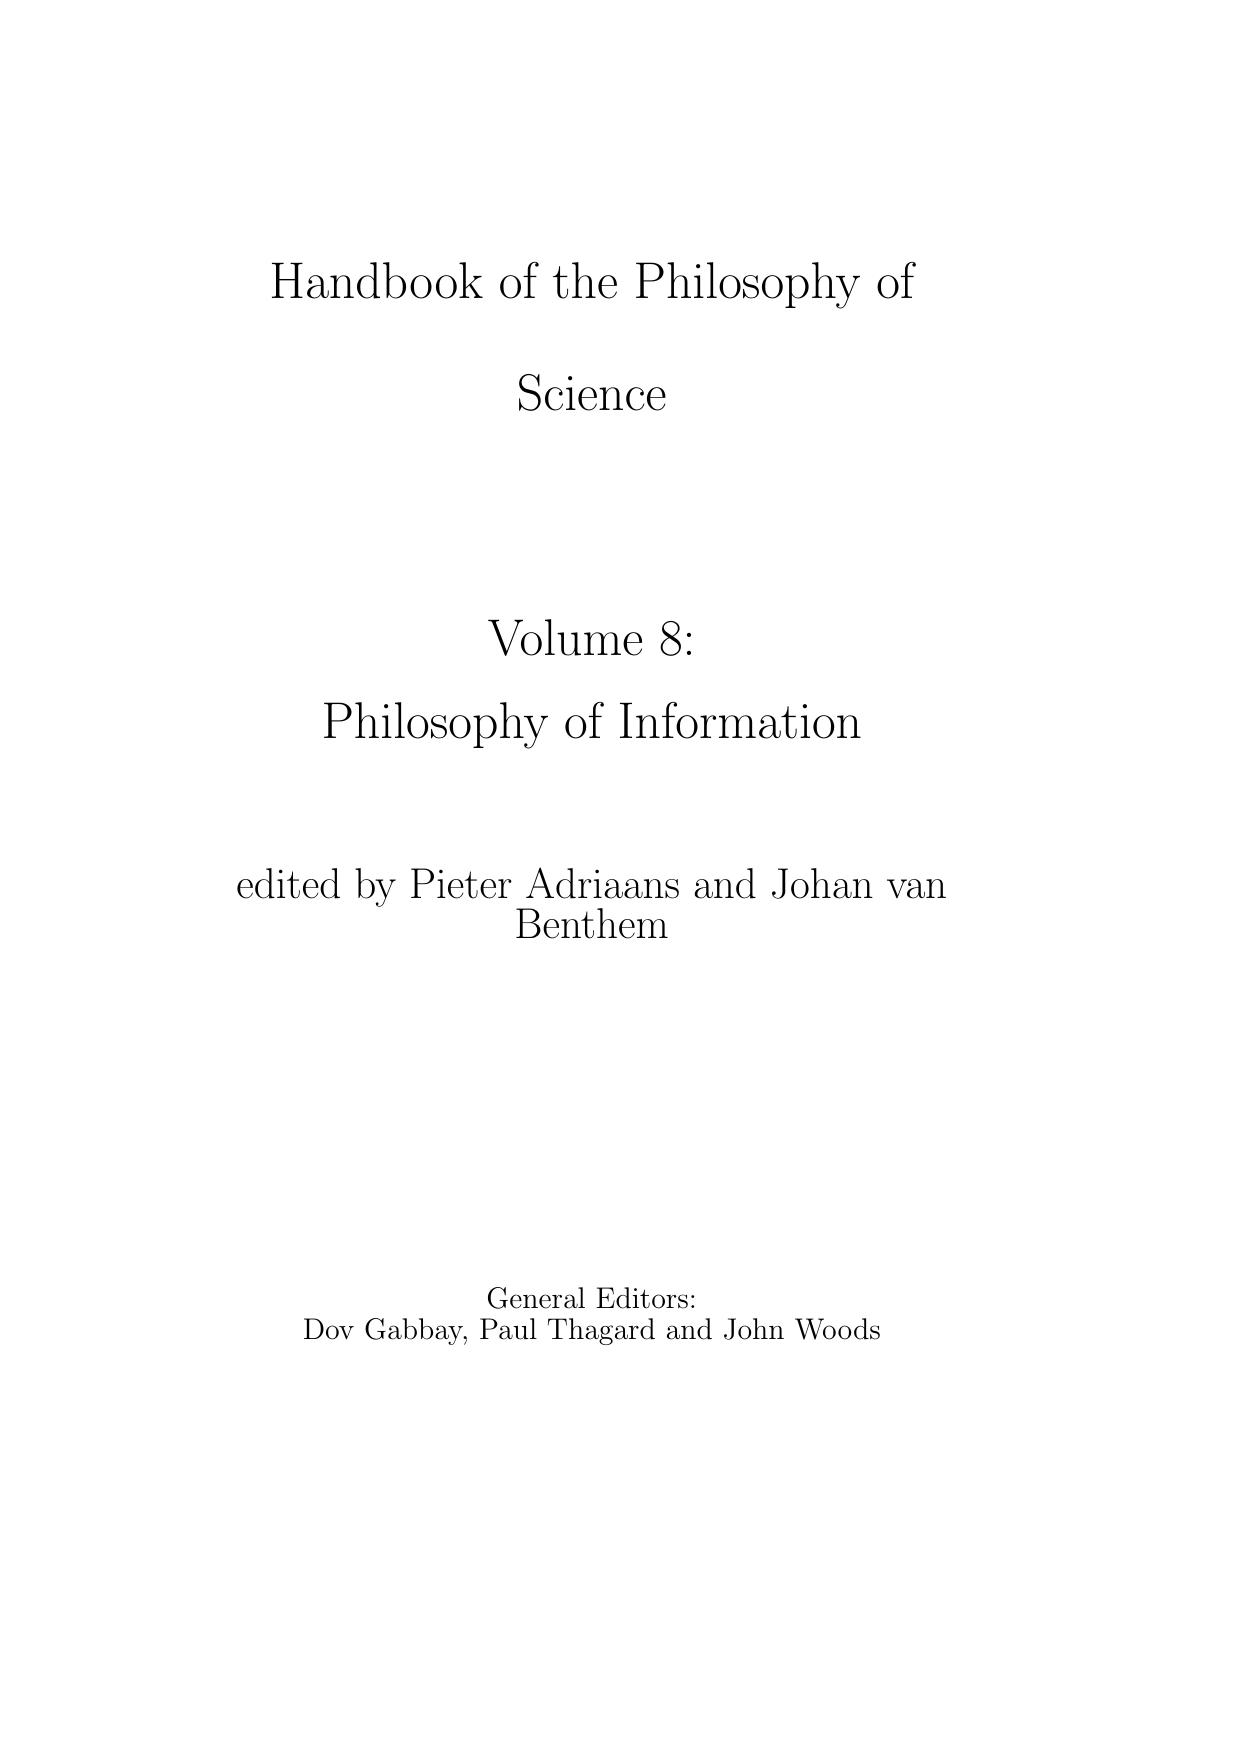 Handbook of the Philosophy of  Science - Volume 8 - Philosophy of Information